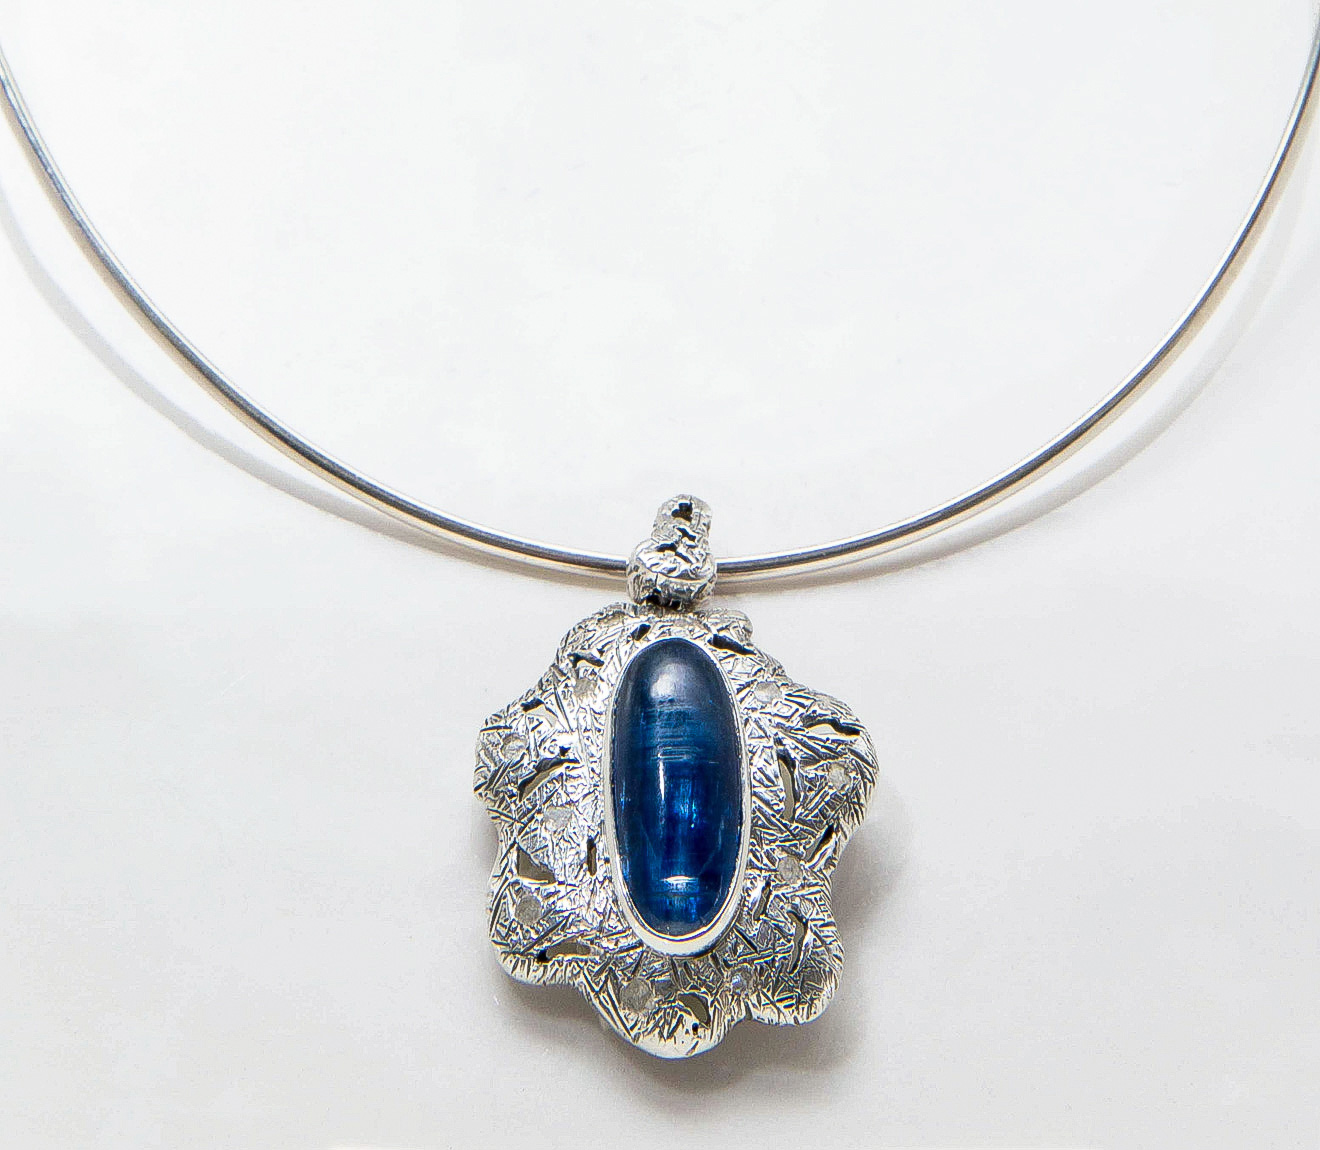 Island pendant,pendant close up view,kyanite,diamond